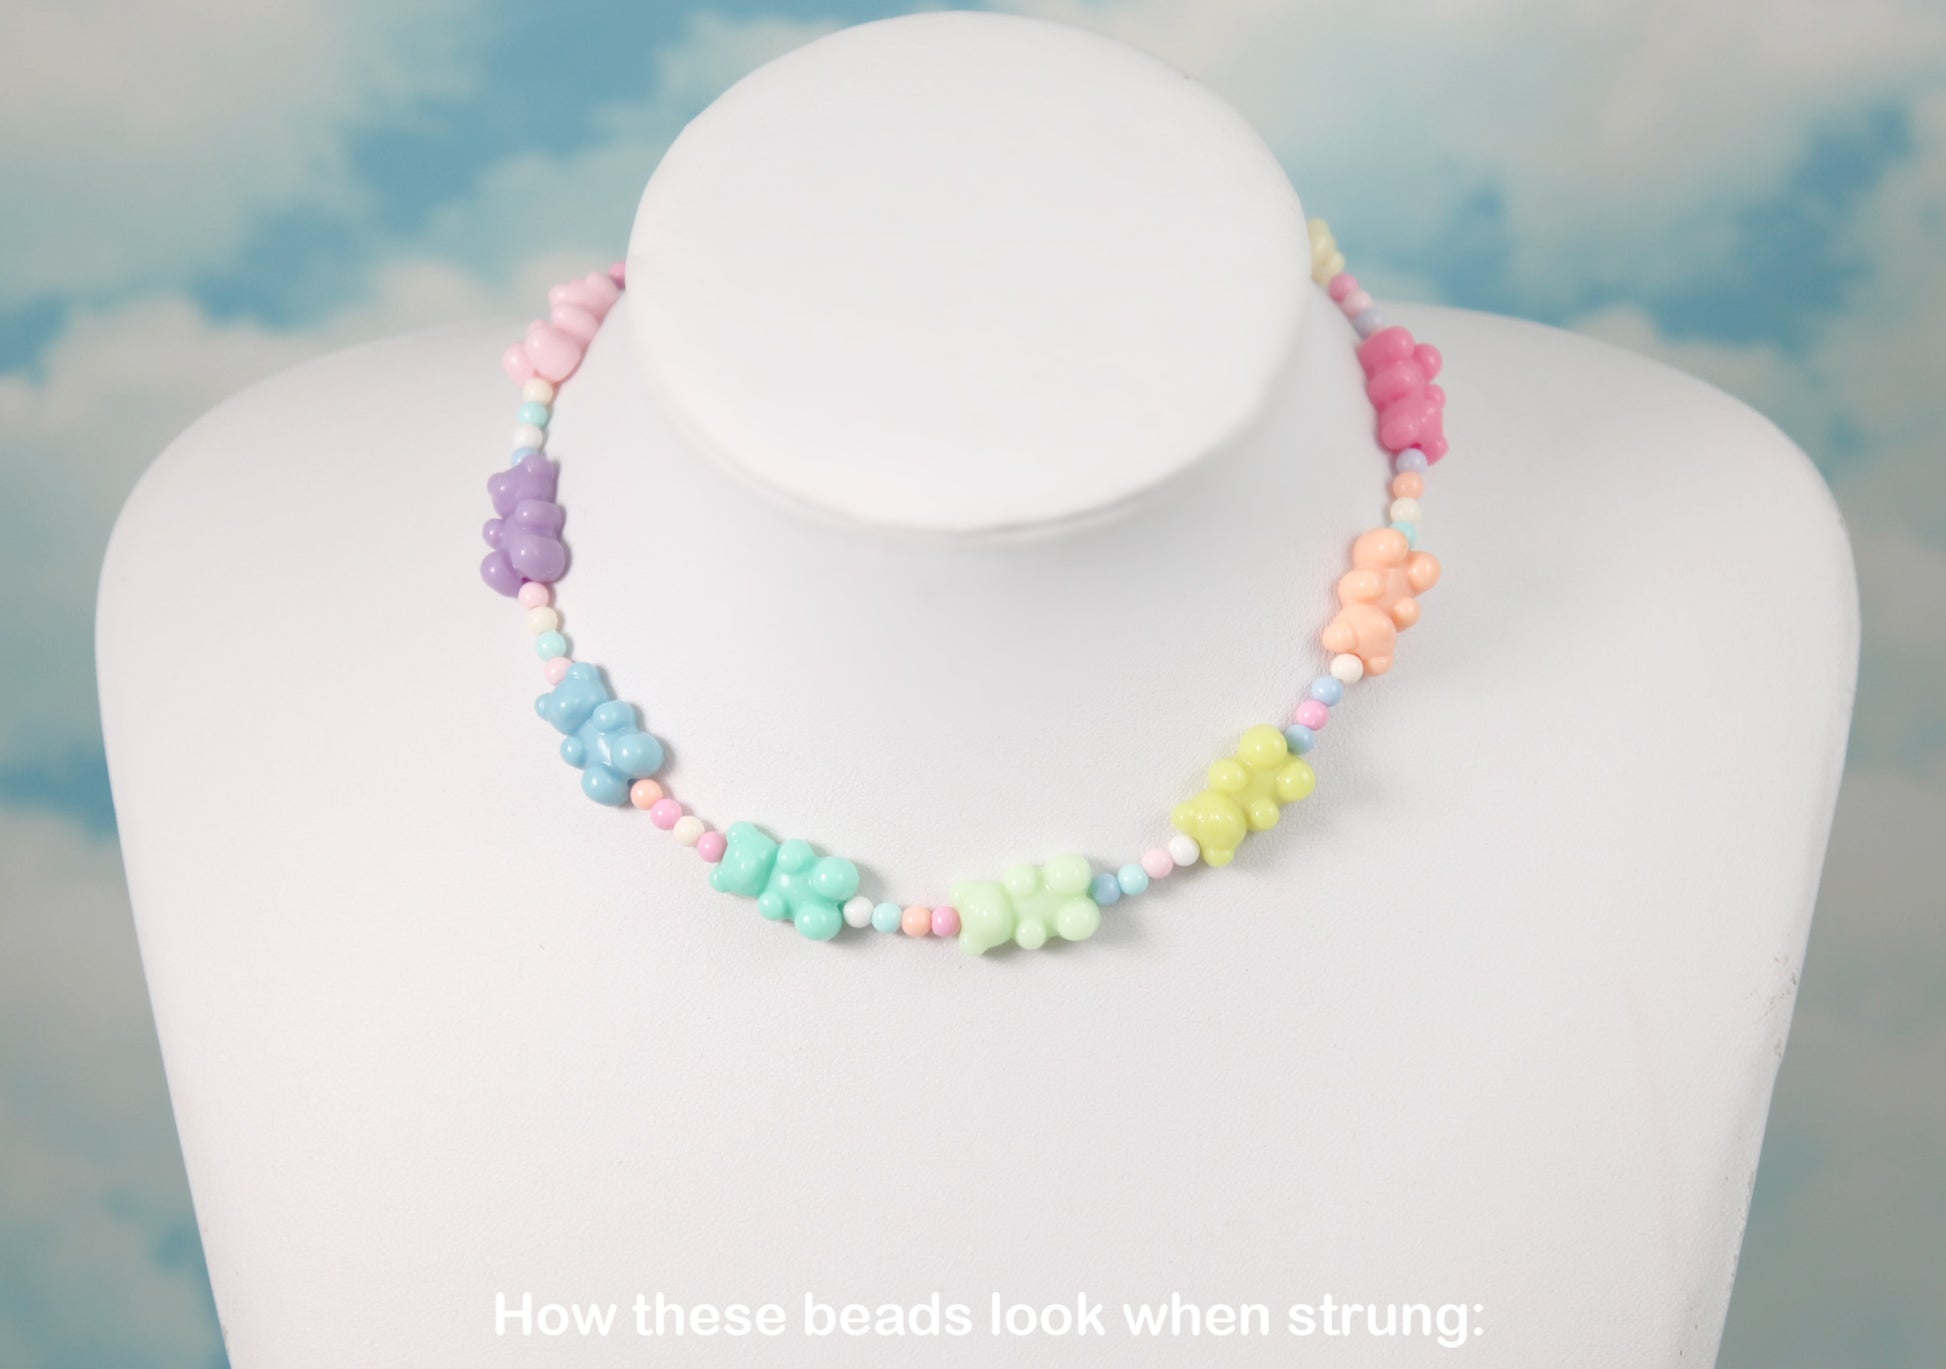 Pastel Teddy Bear Beads, Pastel Bead Mix, Animal Beads for Kids, Unique  Beads, Large Beads, Teddy Bear Bead Assortment for Jewelry Making